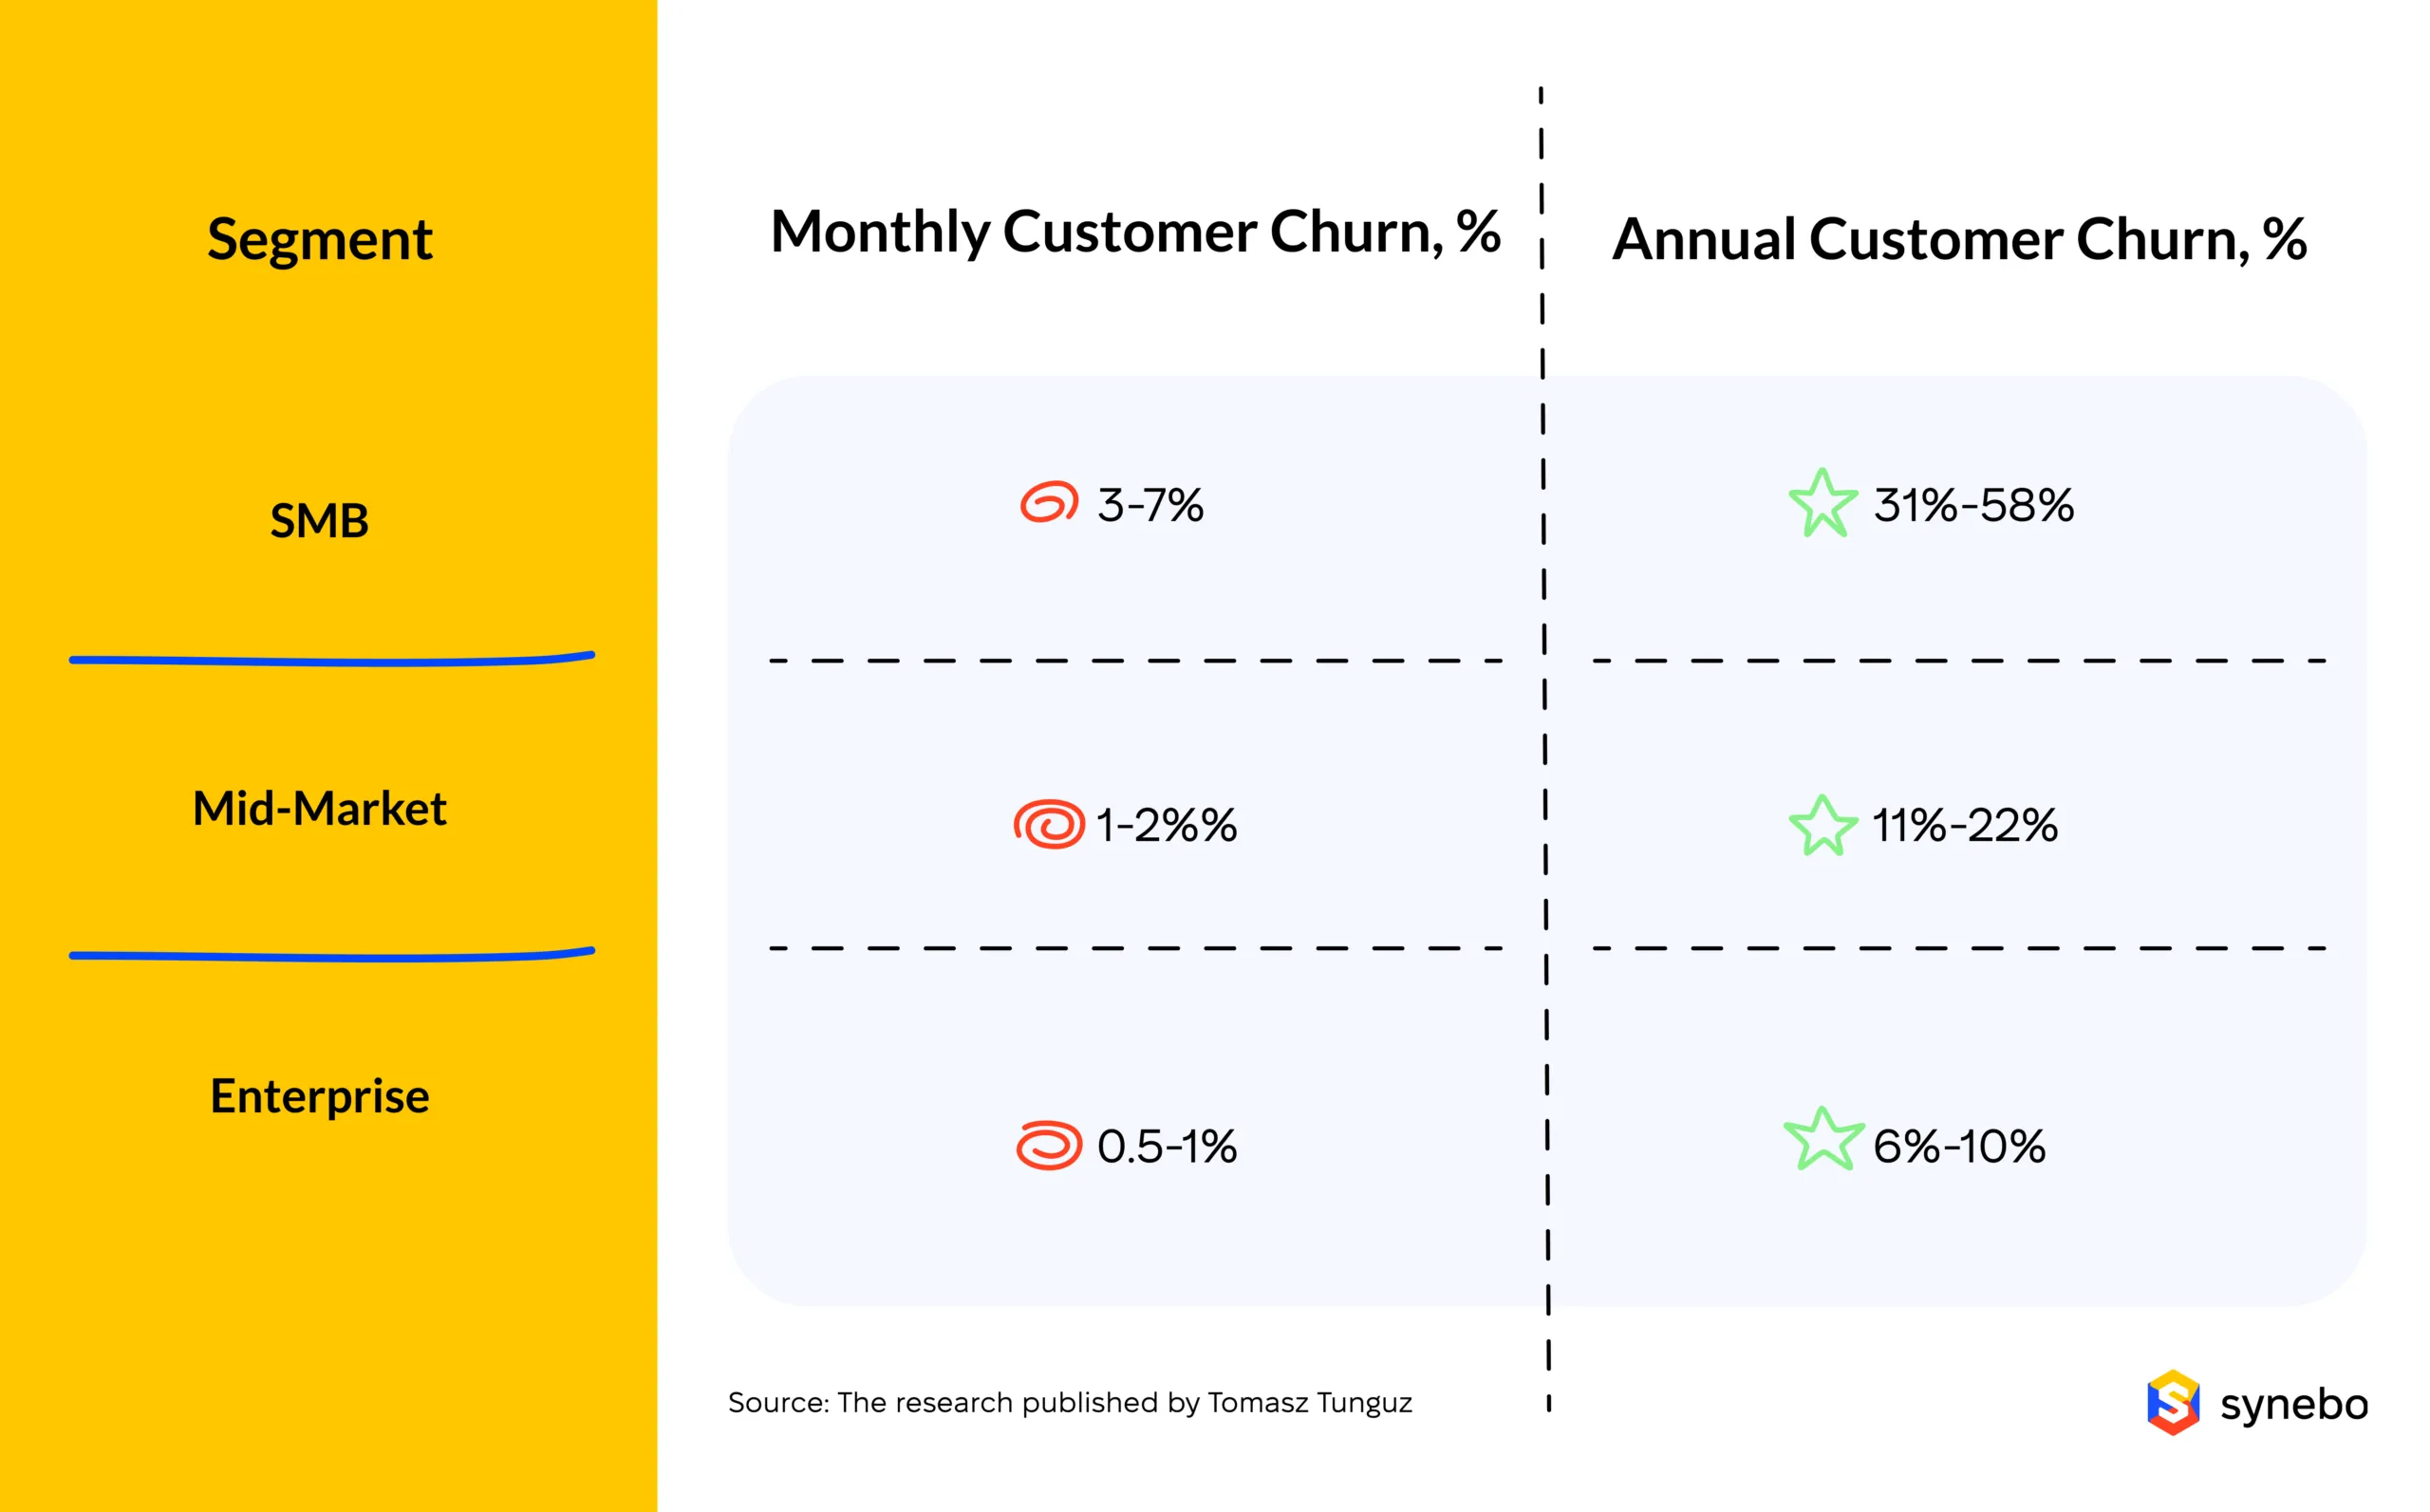 Customer churn across segments